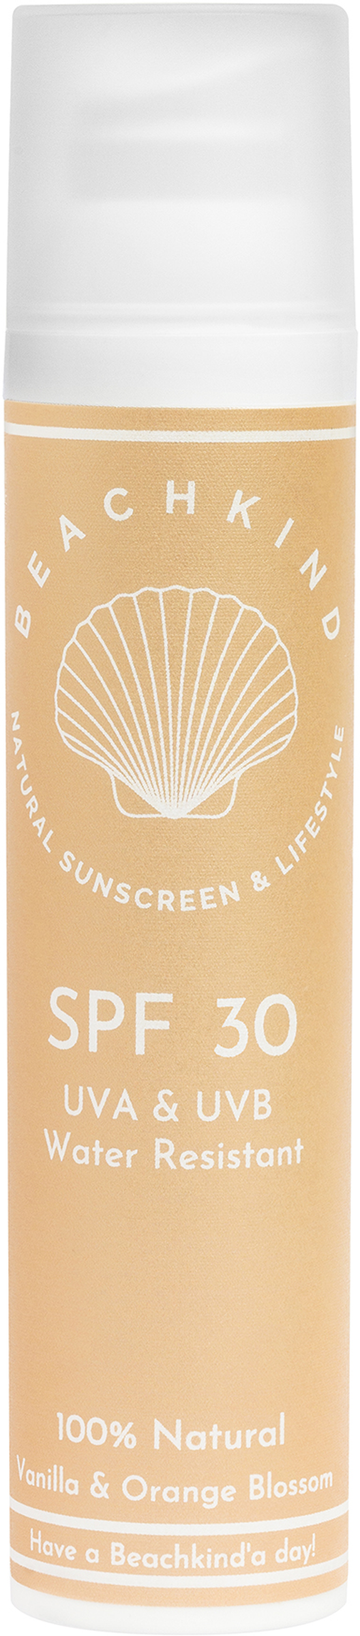 Beachkind Natural sunscreen SPF 30